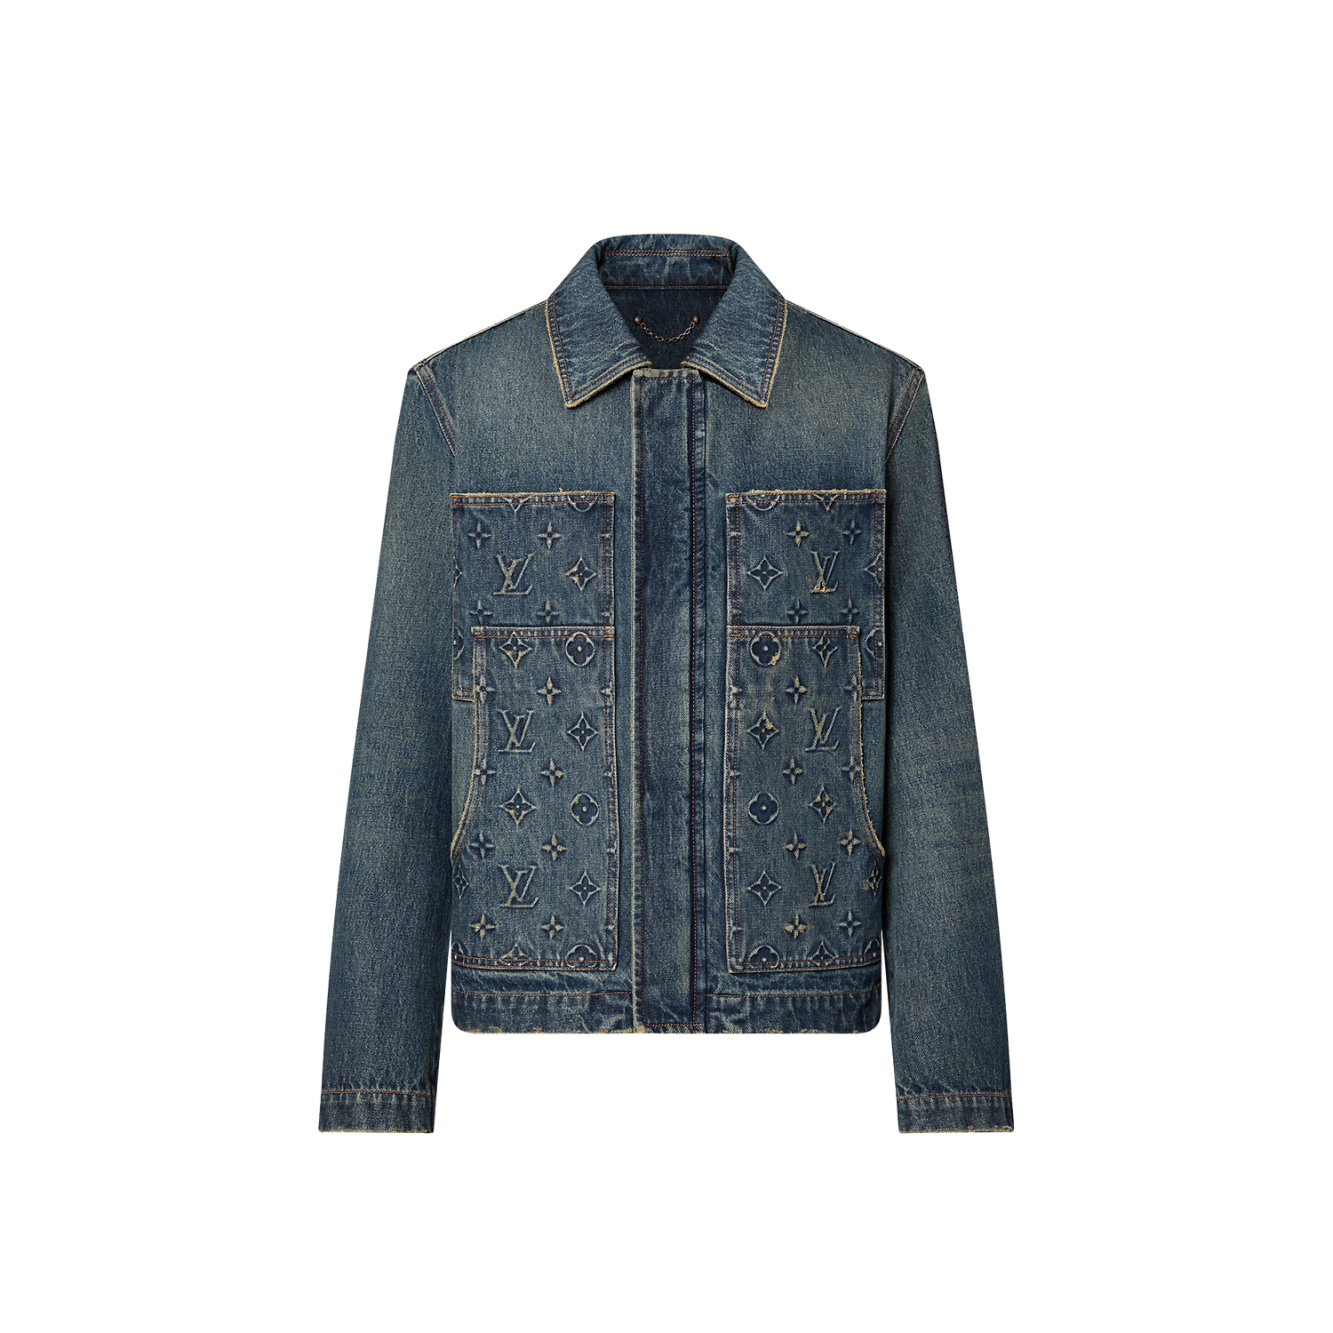 Workwear Denim Jacket in Grey McQ Alexander McQueen